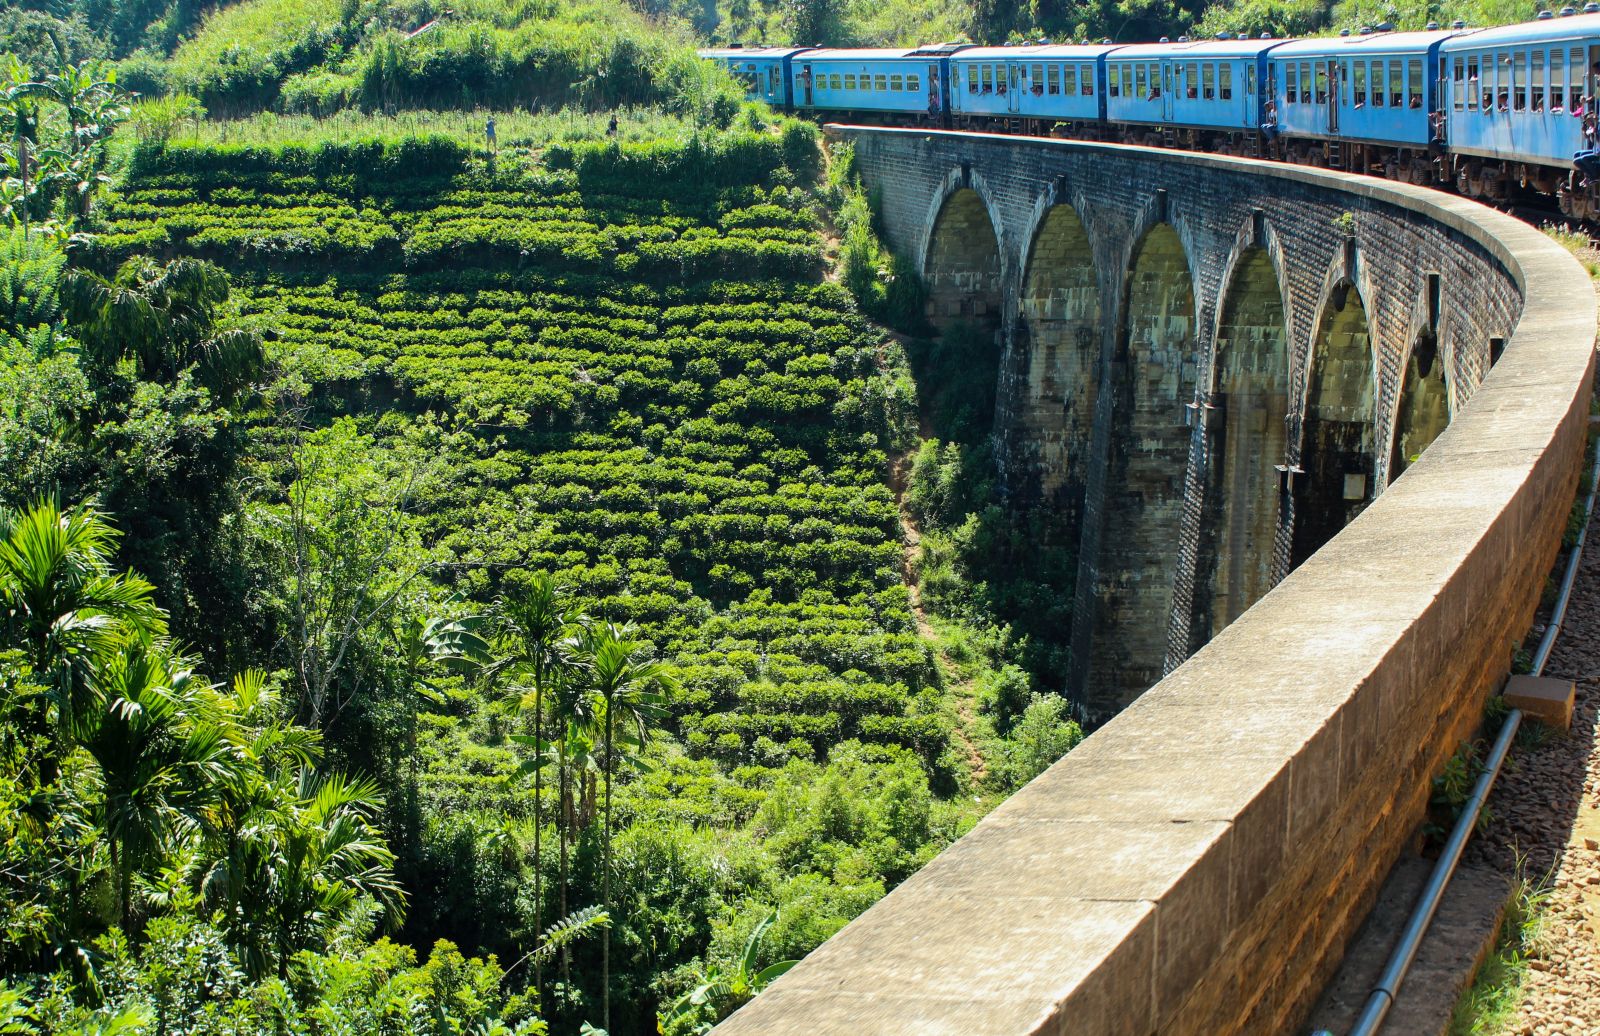 Train travelling through the tea country in Sri Lanka